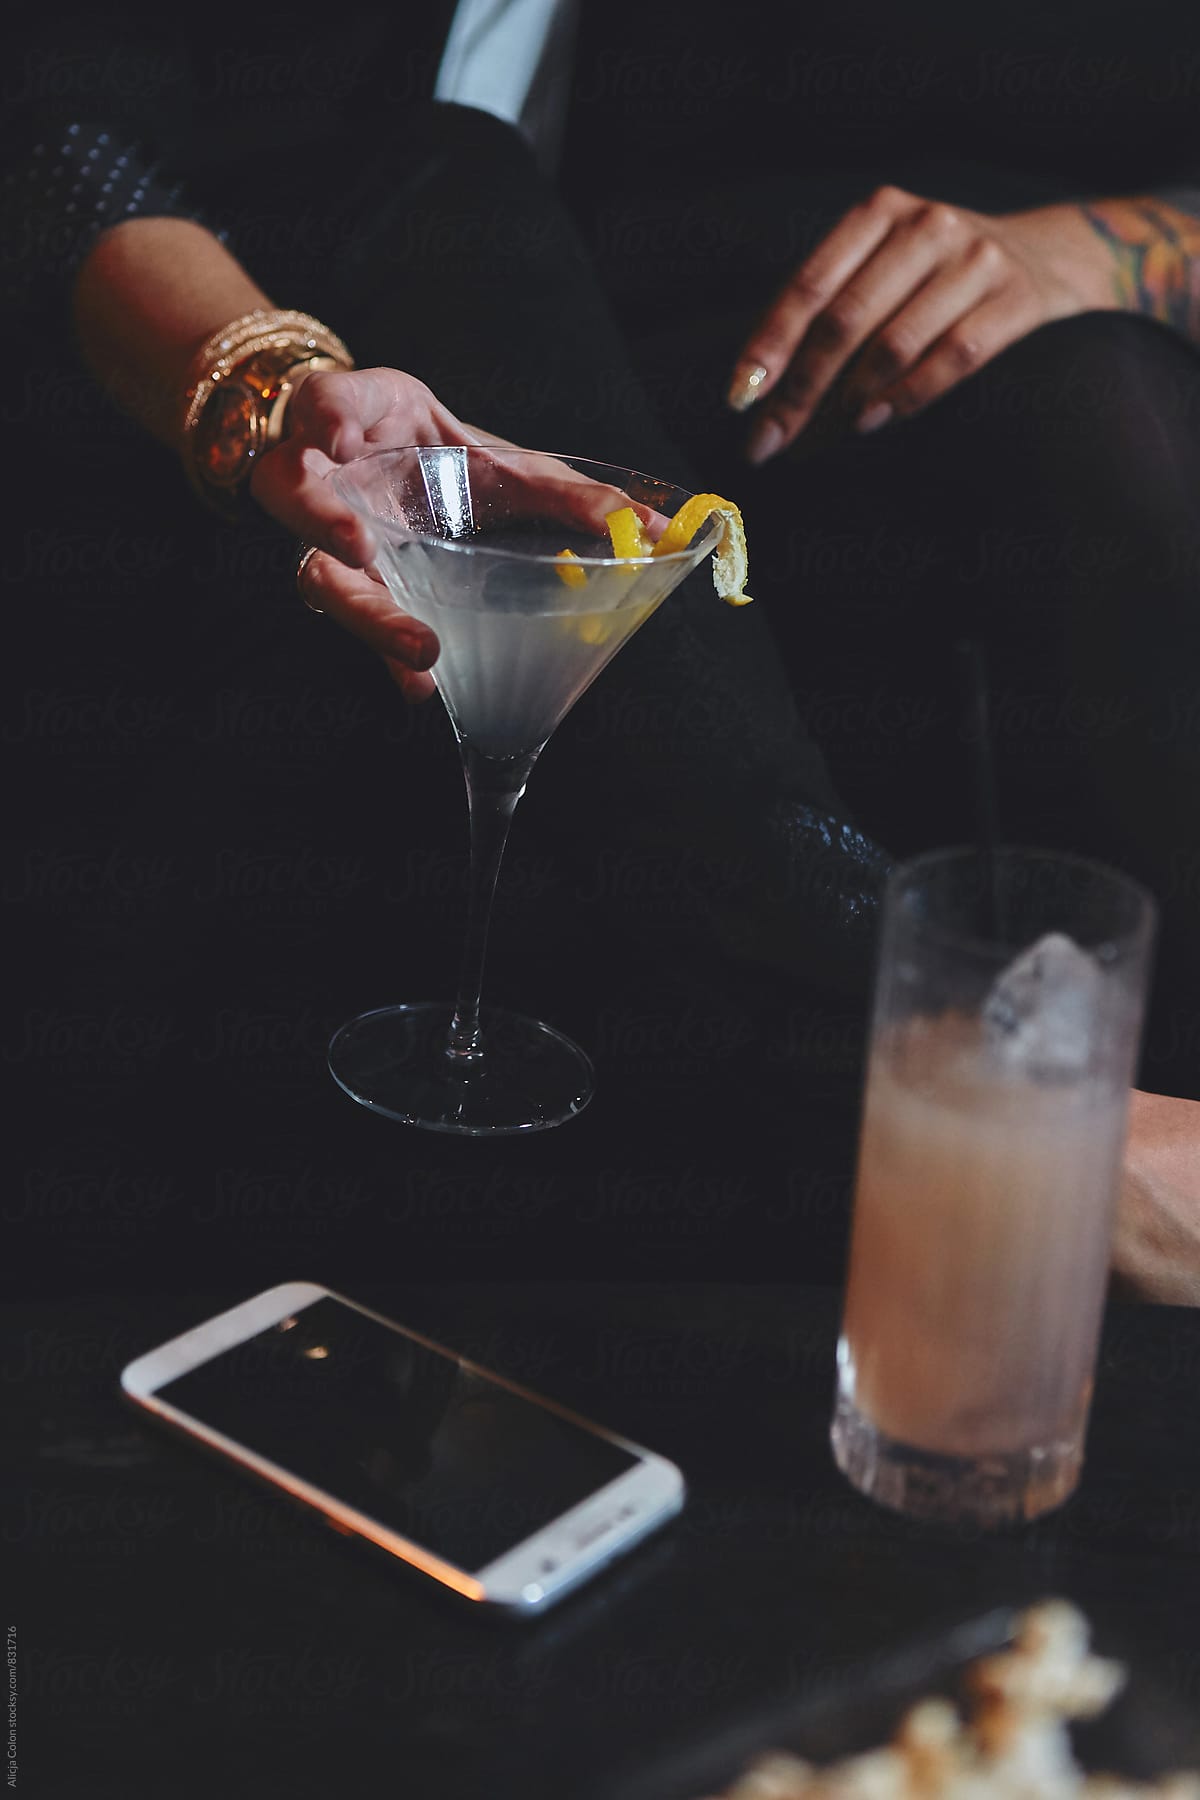 Hand holding a lemon martini